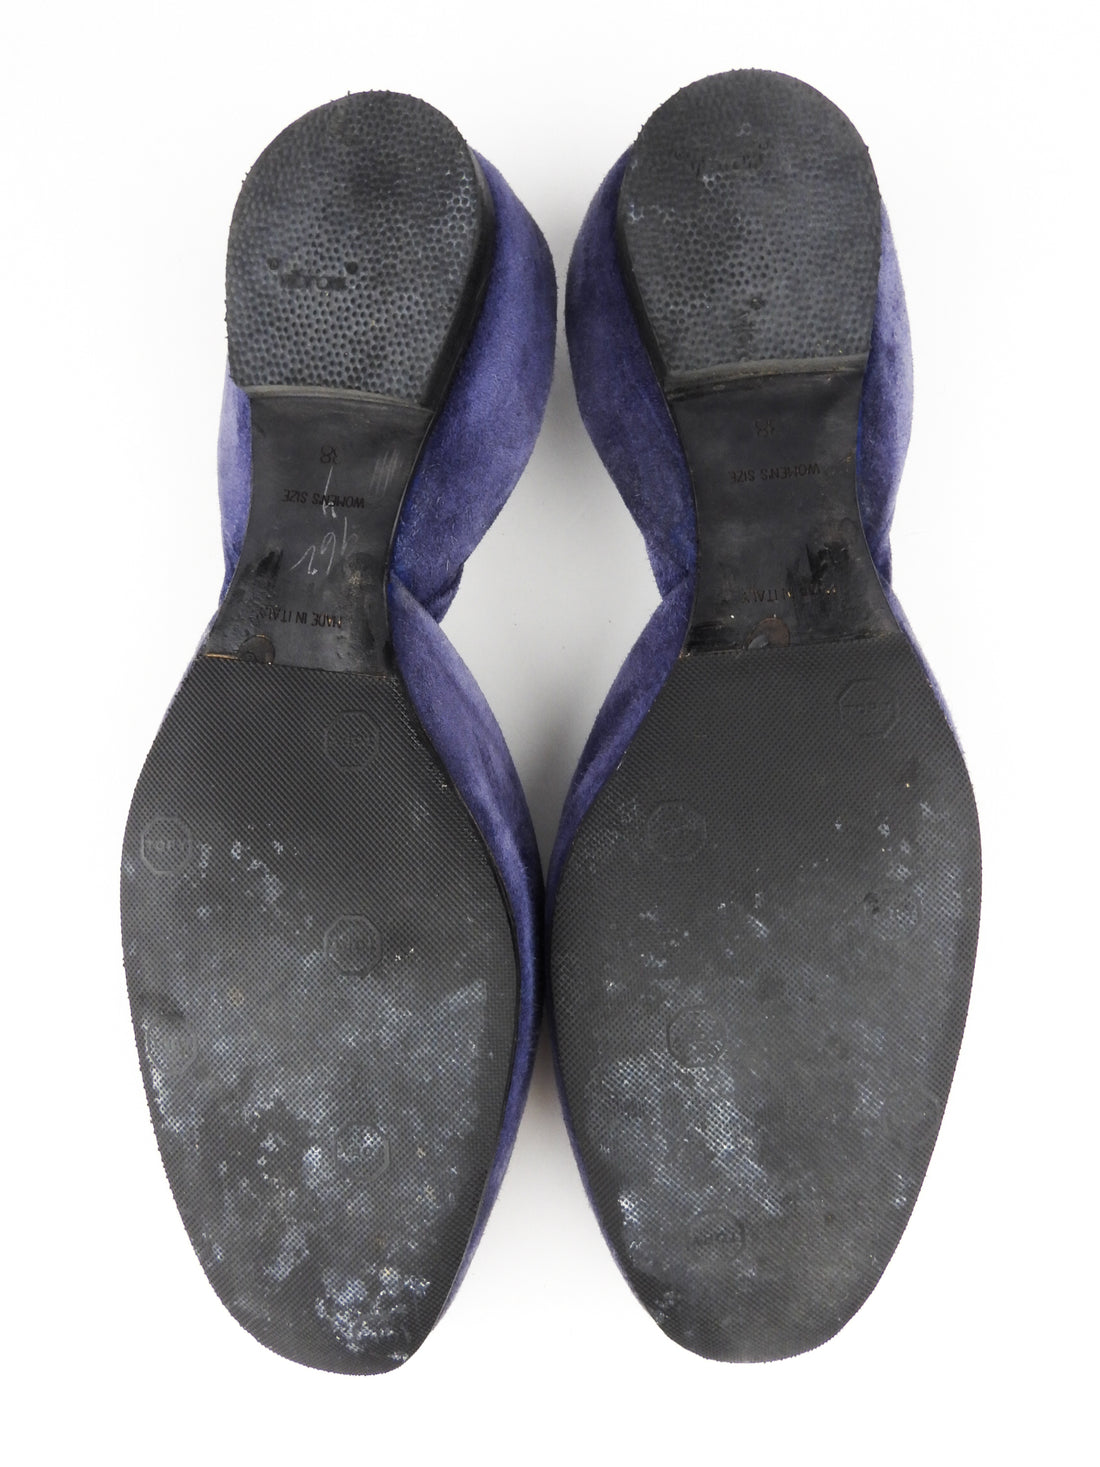 Roger Vivier Blue Suede Leather Chips Flat Shoes - 38